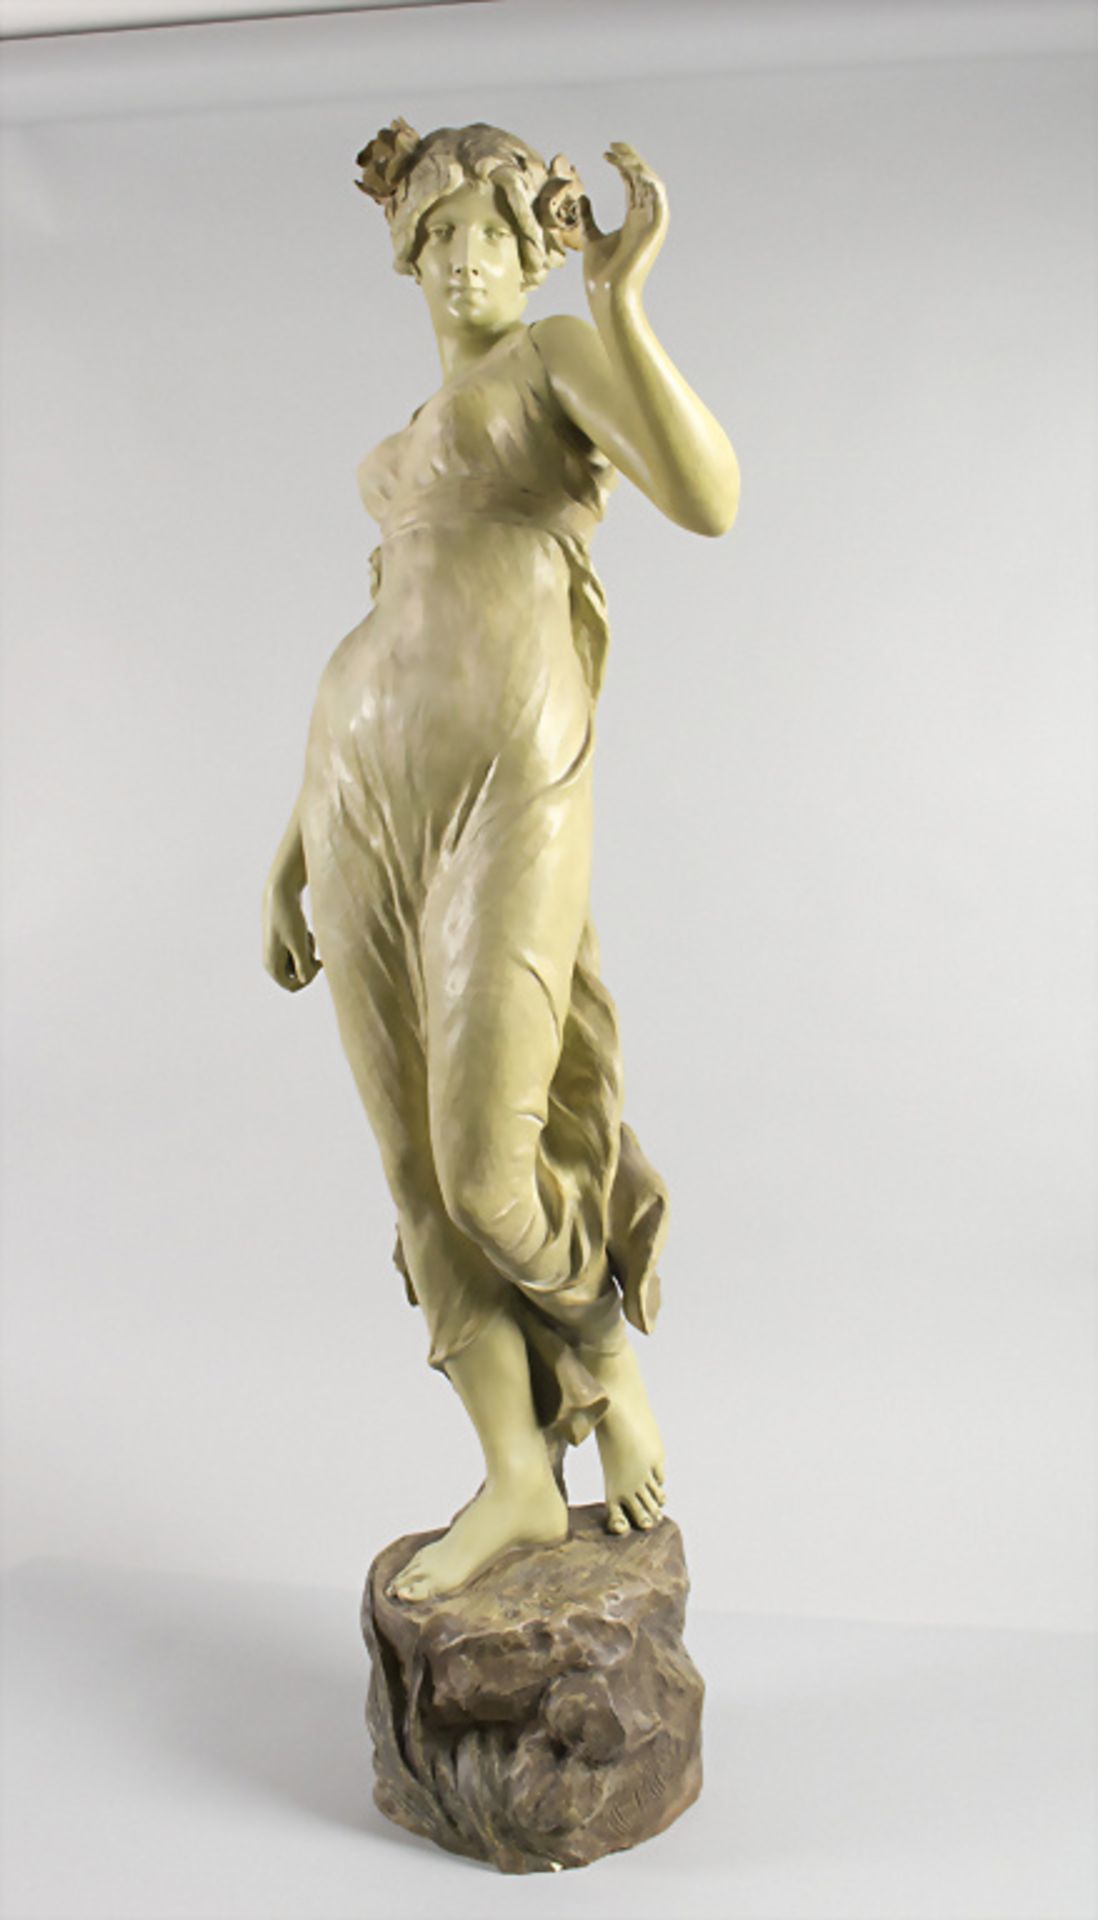 Jugendstil-Skulptur 'Tänzerin' / An Art Nouveau sculpture 'Dancer', Goldscheider, Wien, um 1900 - Image 2 of 9